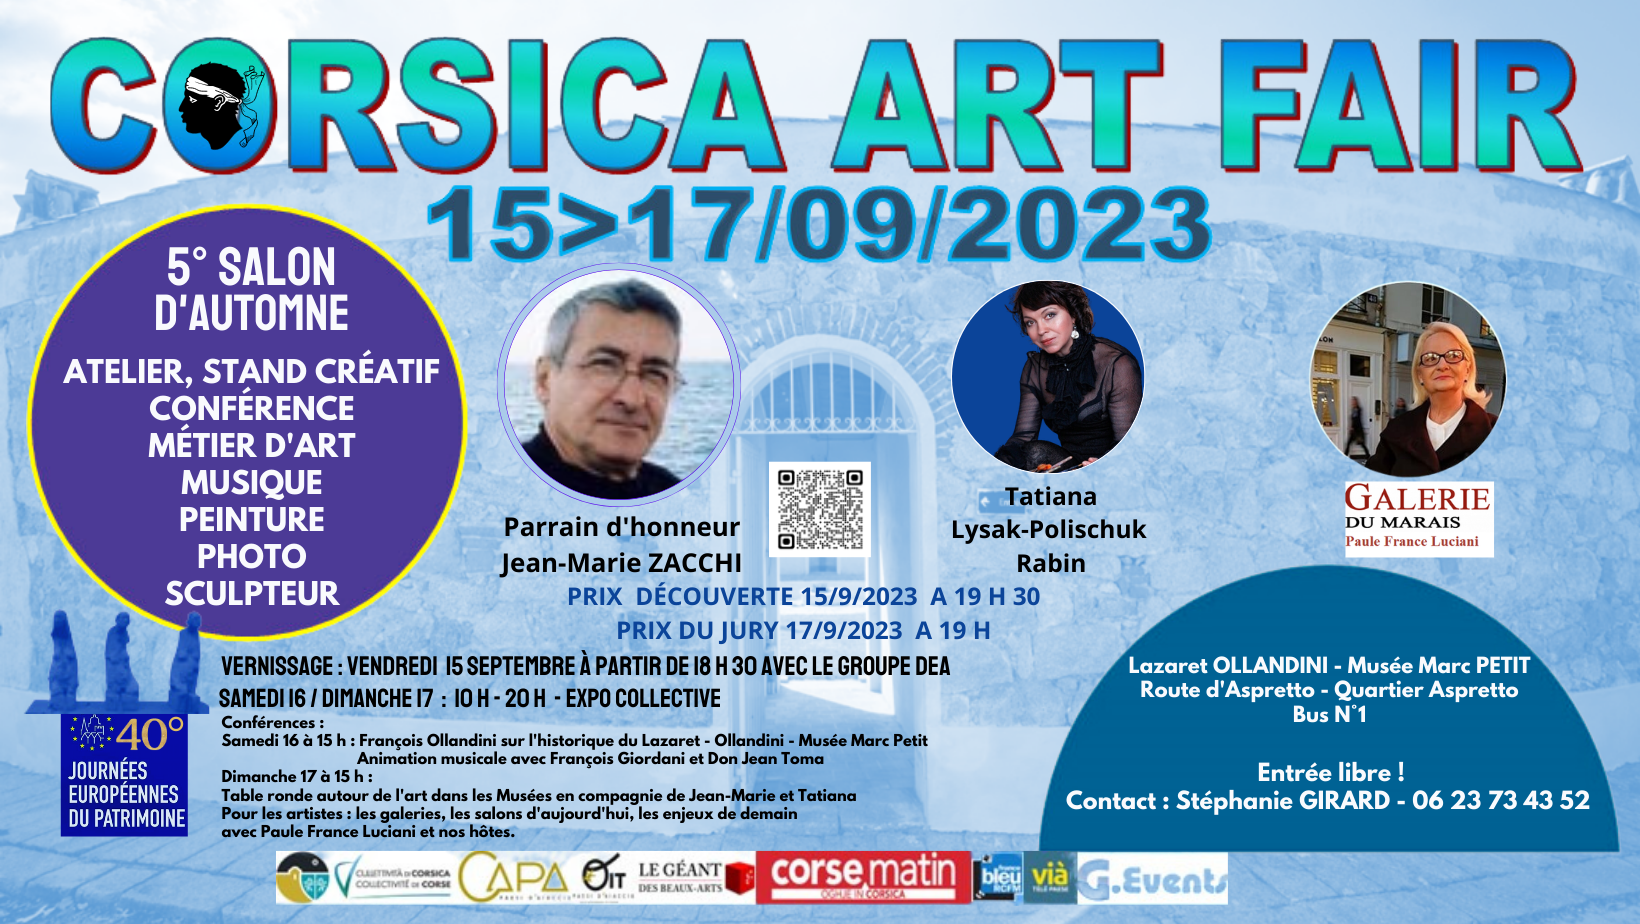 Corsica Art Fair - Salon d'Automne